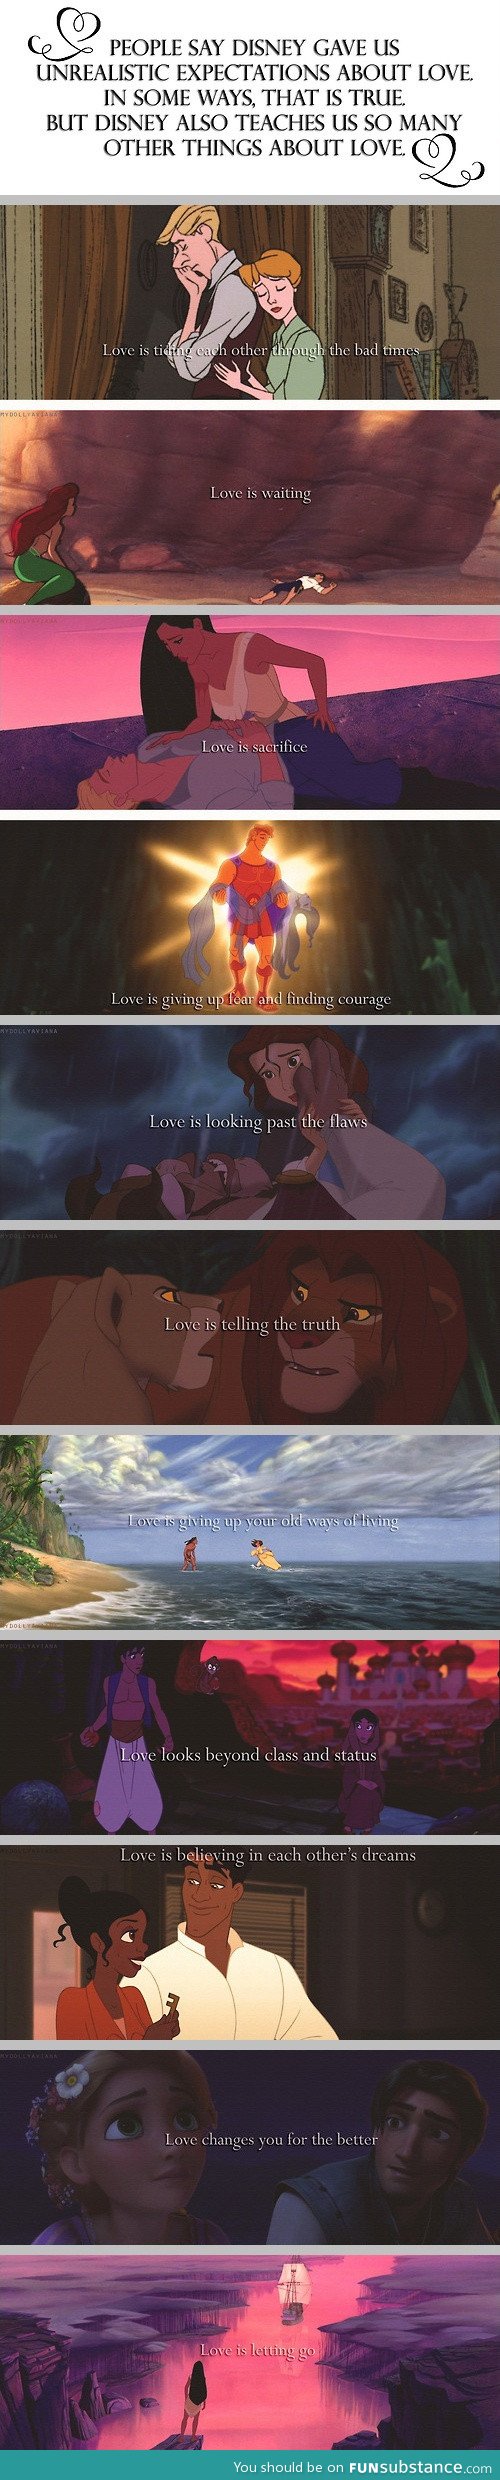 Disney's Love Lessons